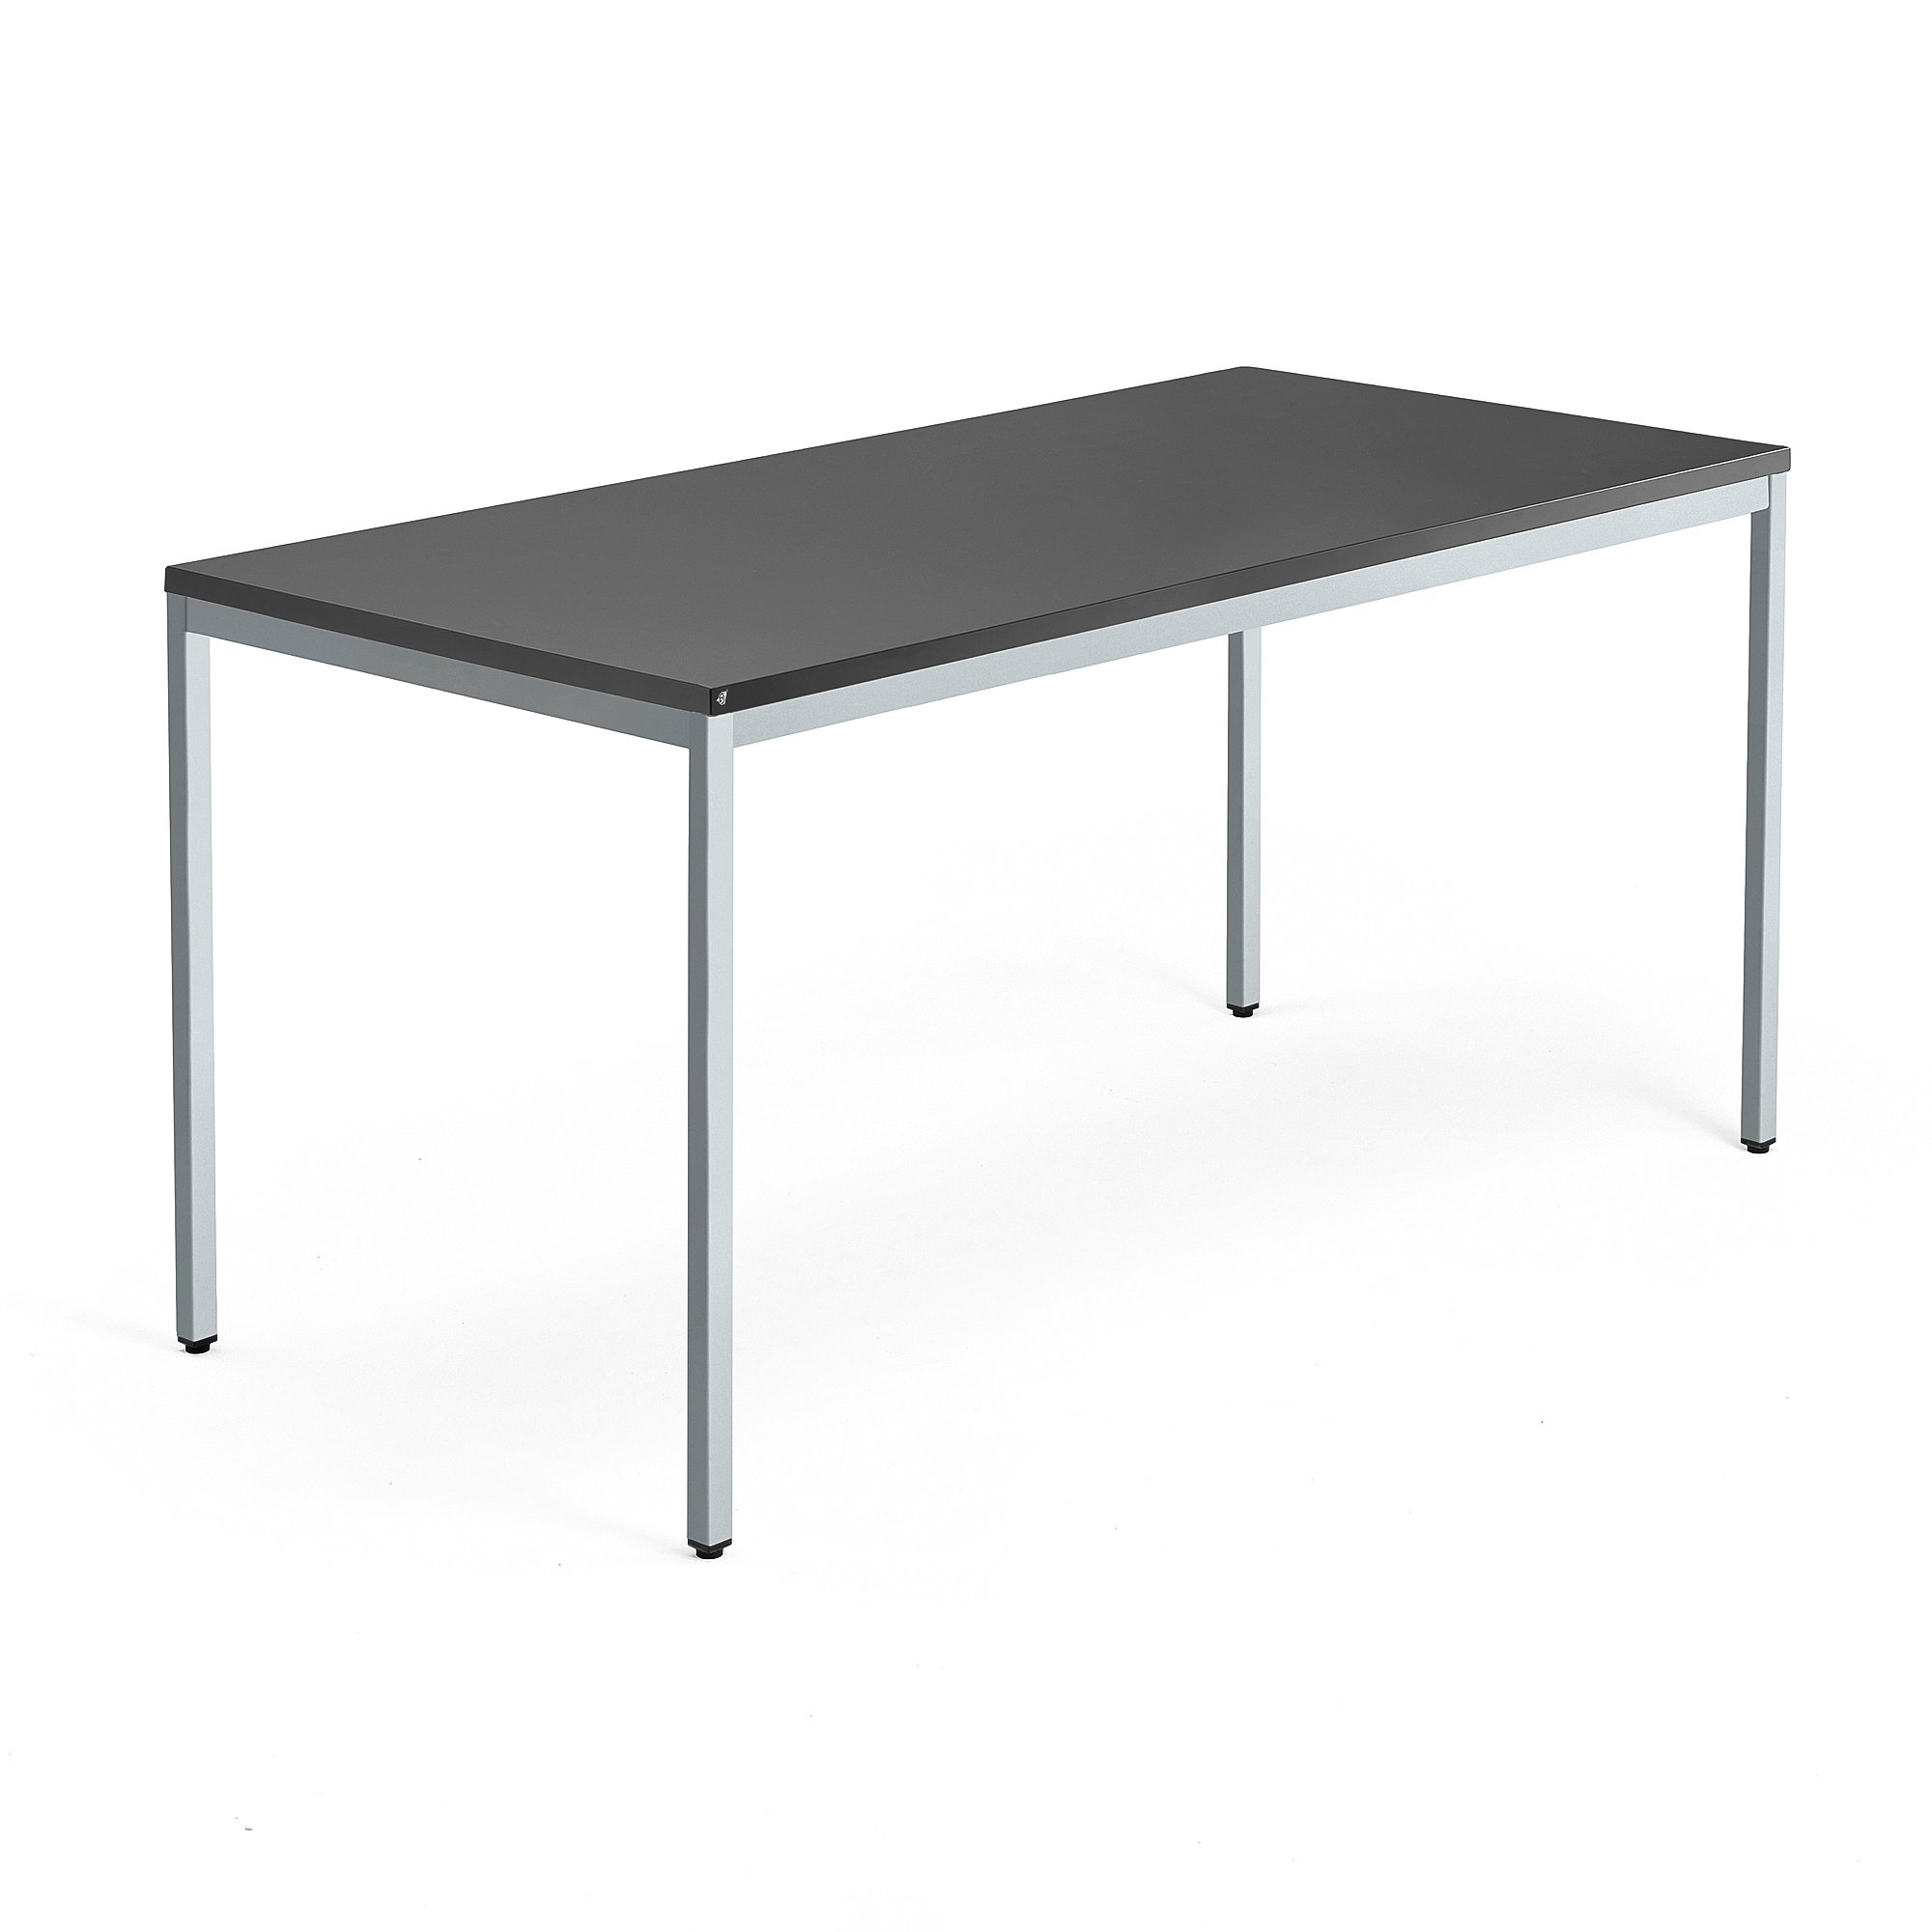 Stôl MODULUS, 1600x800 mm, strieborná konštrukcia, čierny